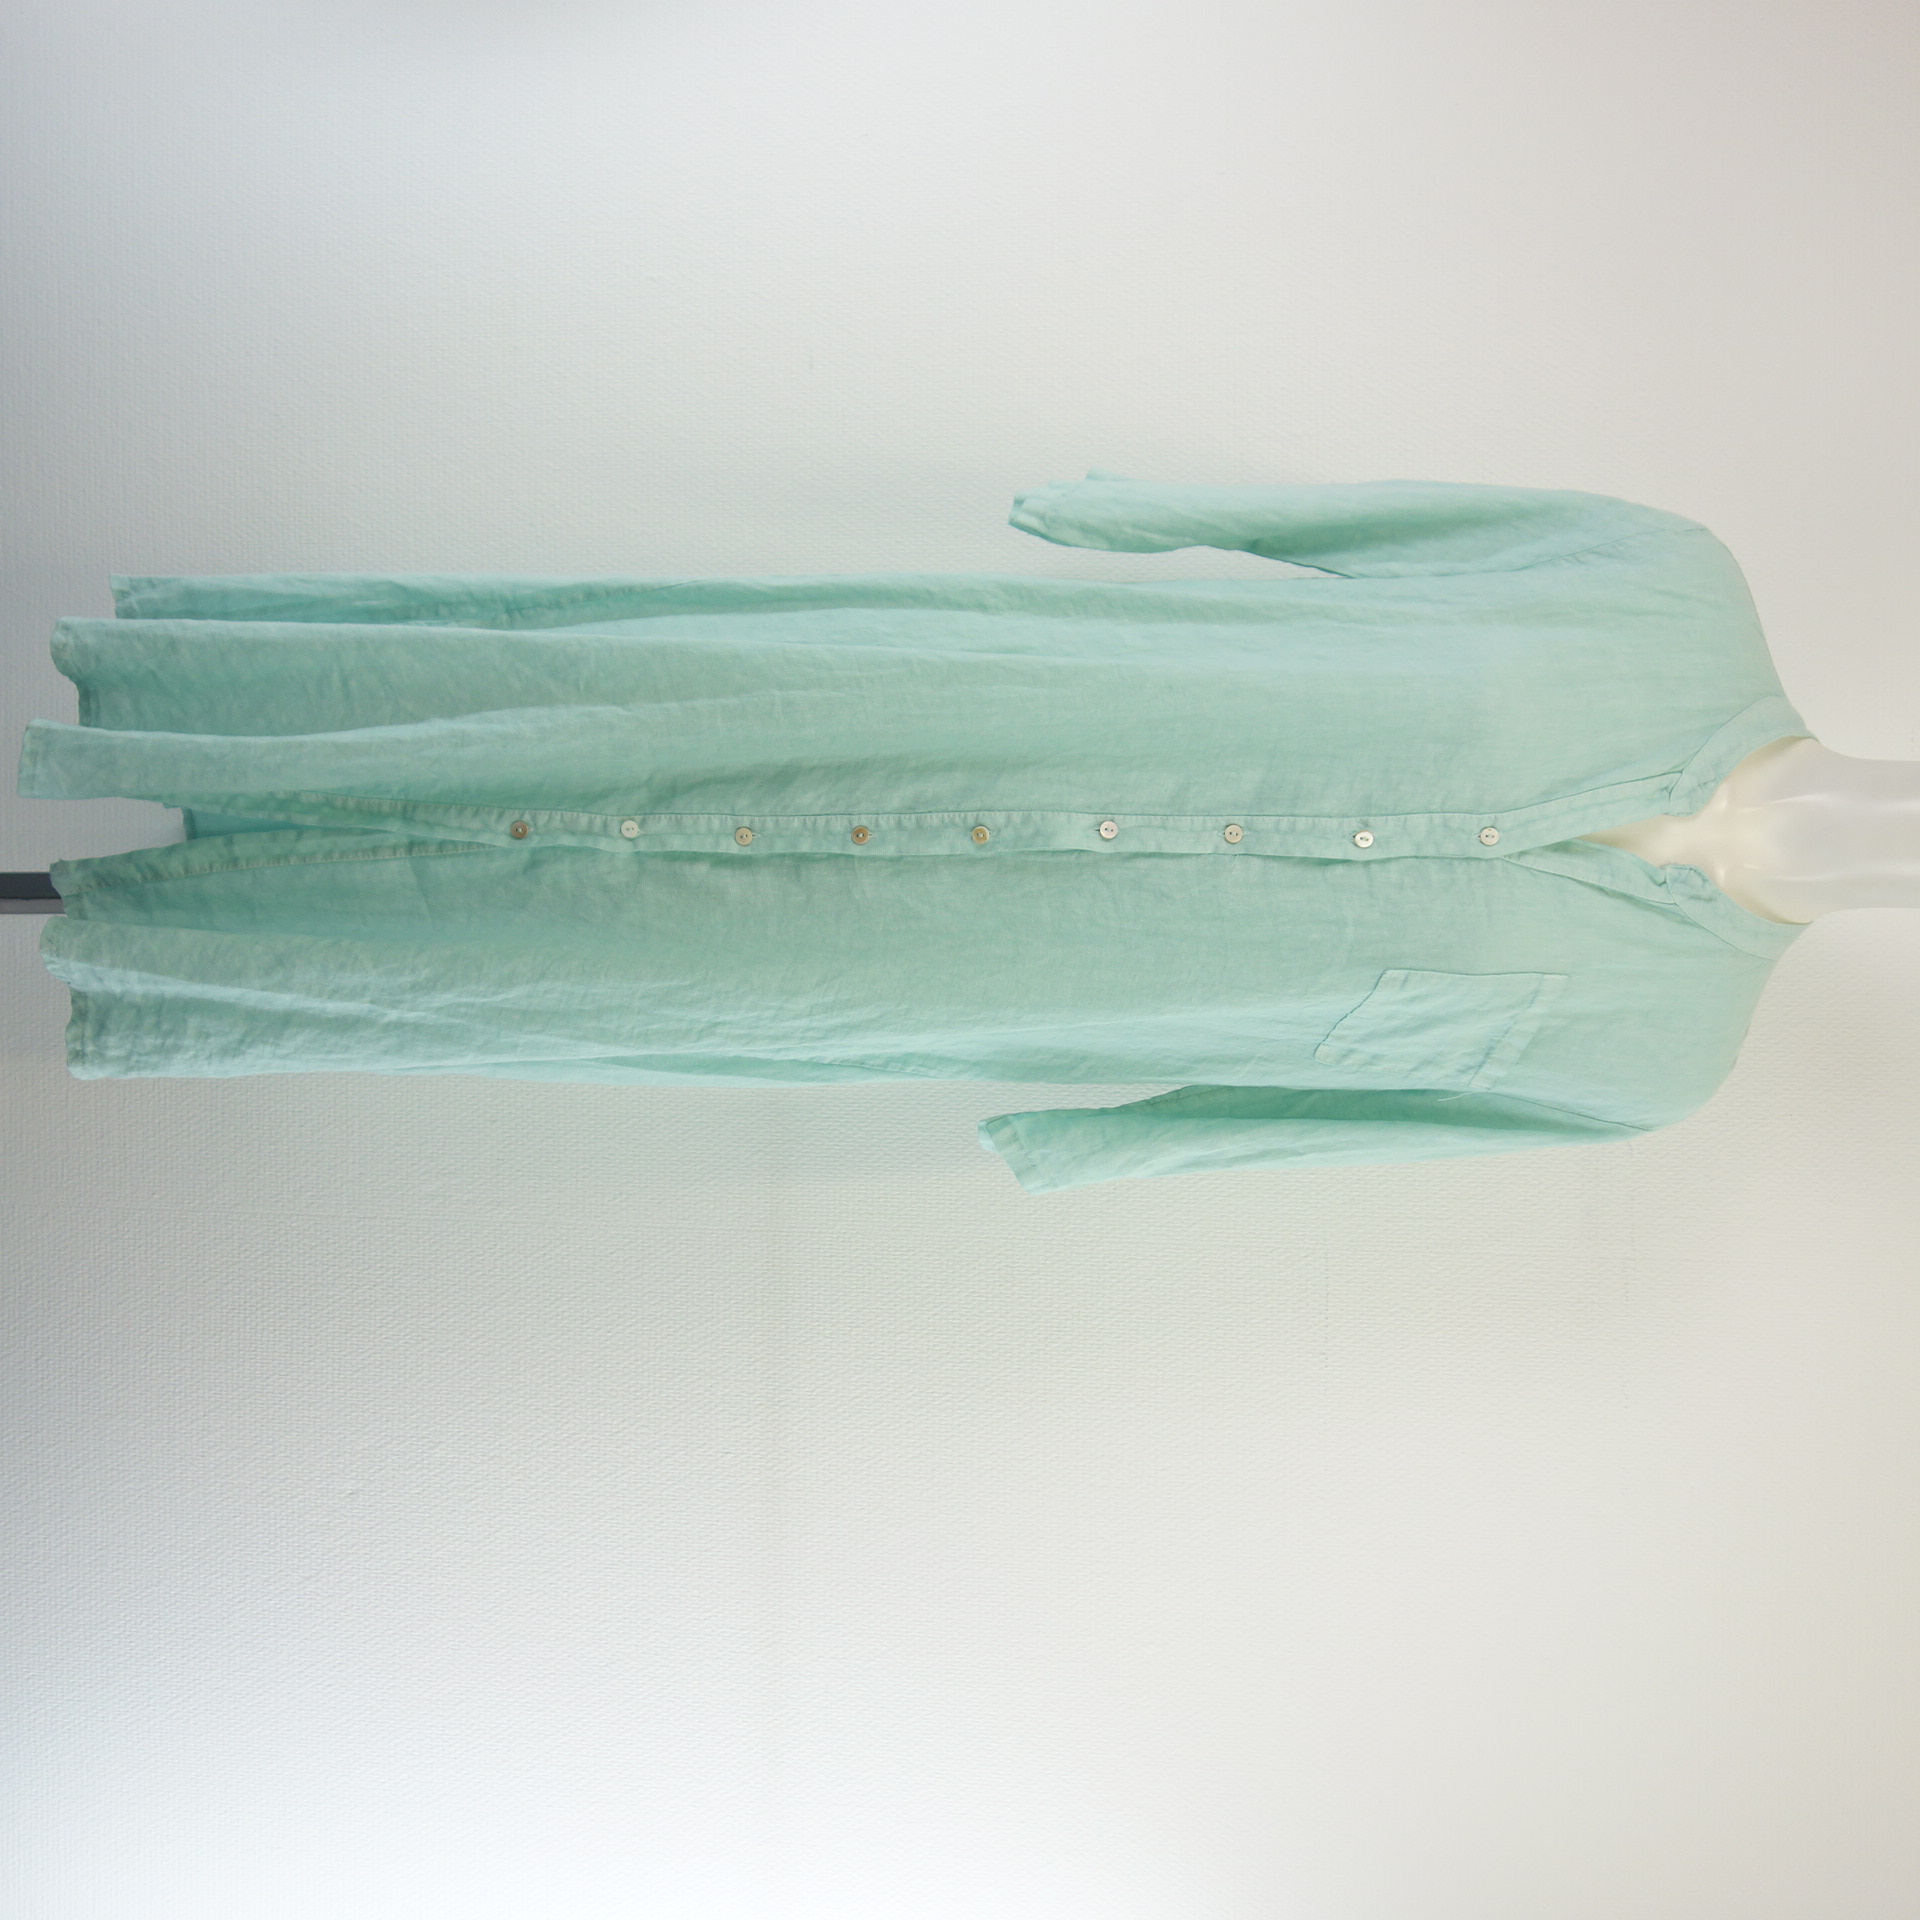 TIFFANY Damen Midi Kleid Tunika Hemdkleid Leinenkleid 100% Leinen Größe S / M Mint